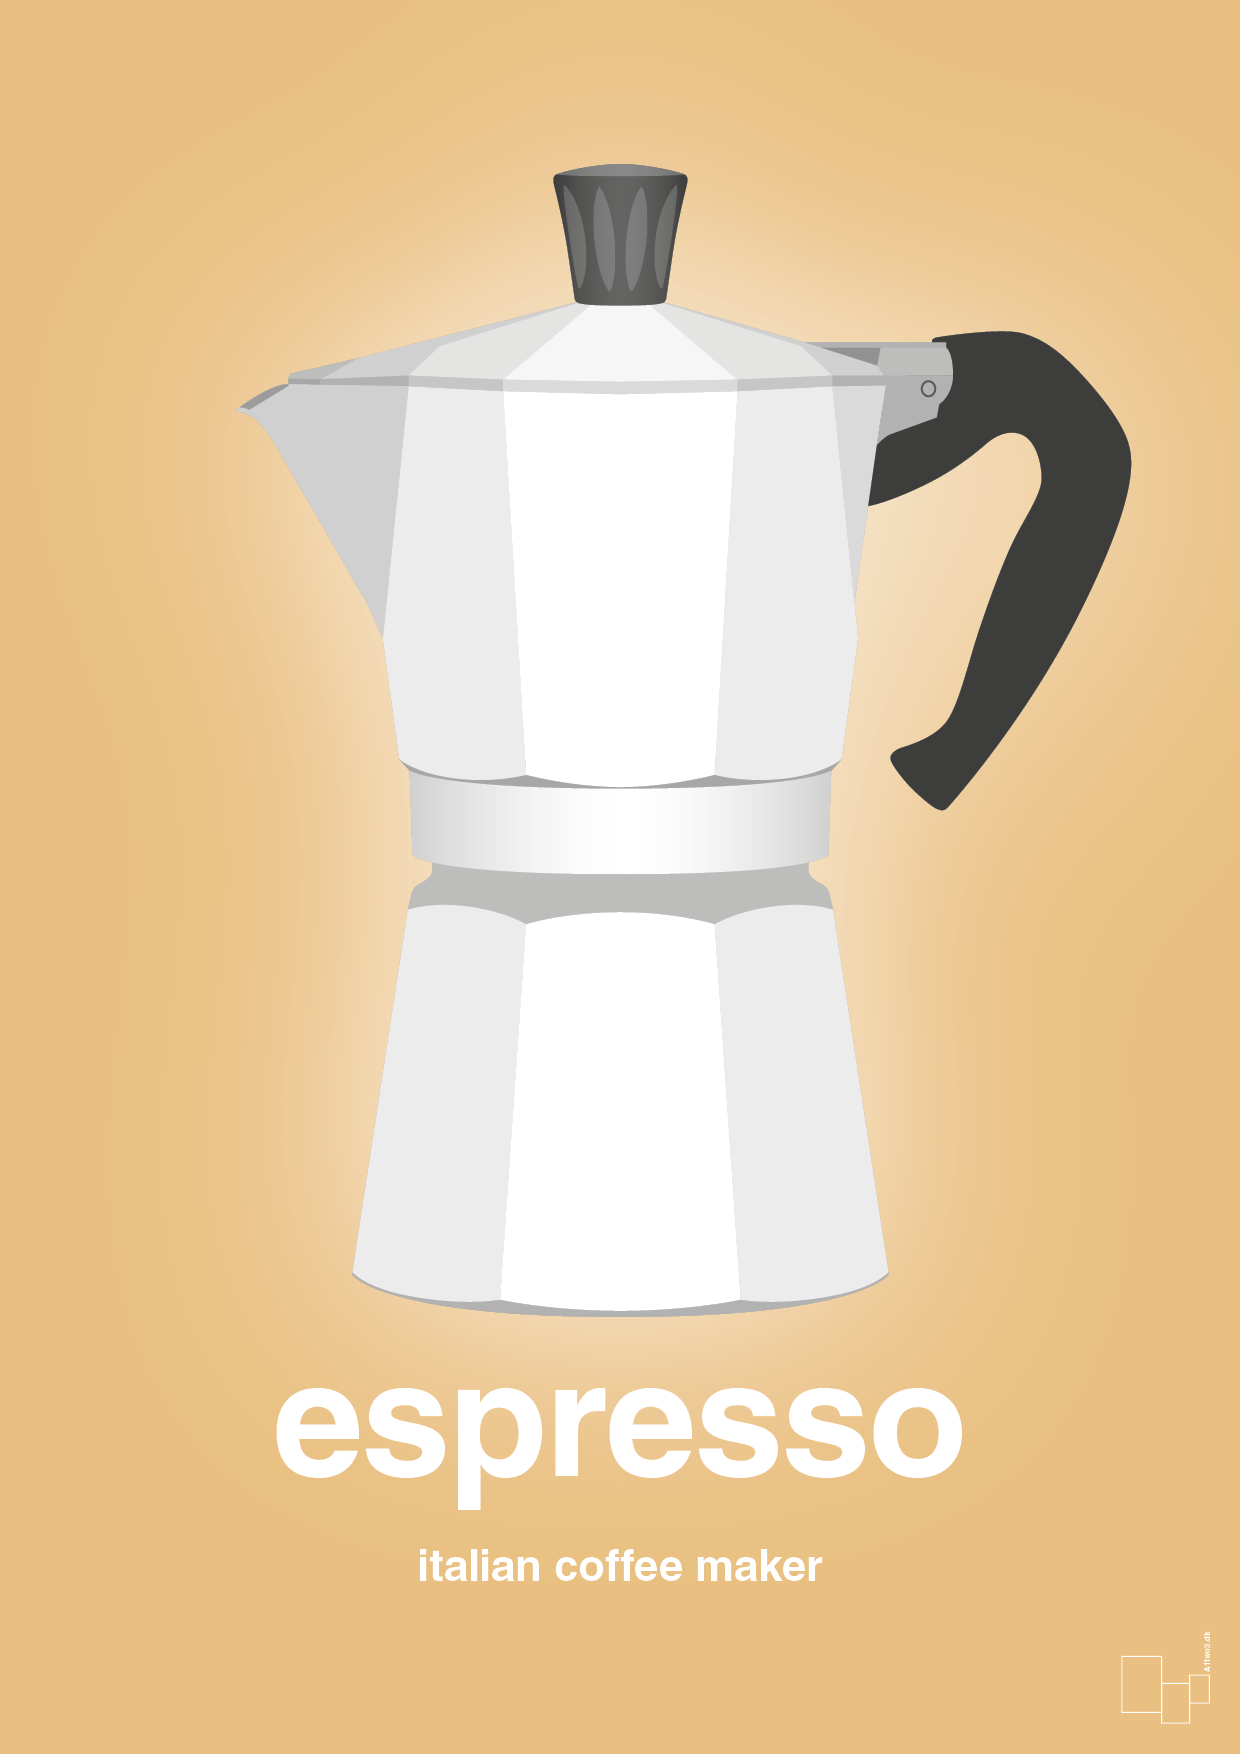 espresso - italian coffee maker - Plakat med Mad & Drikke i Charismatic